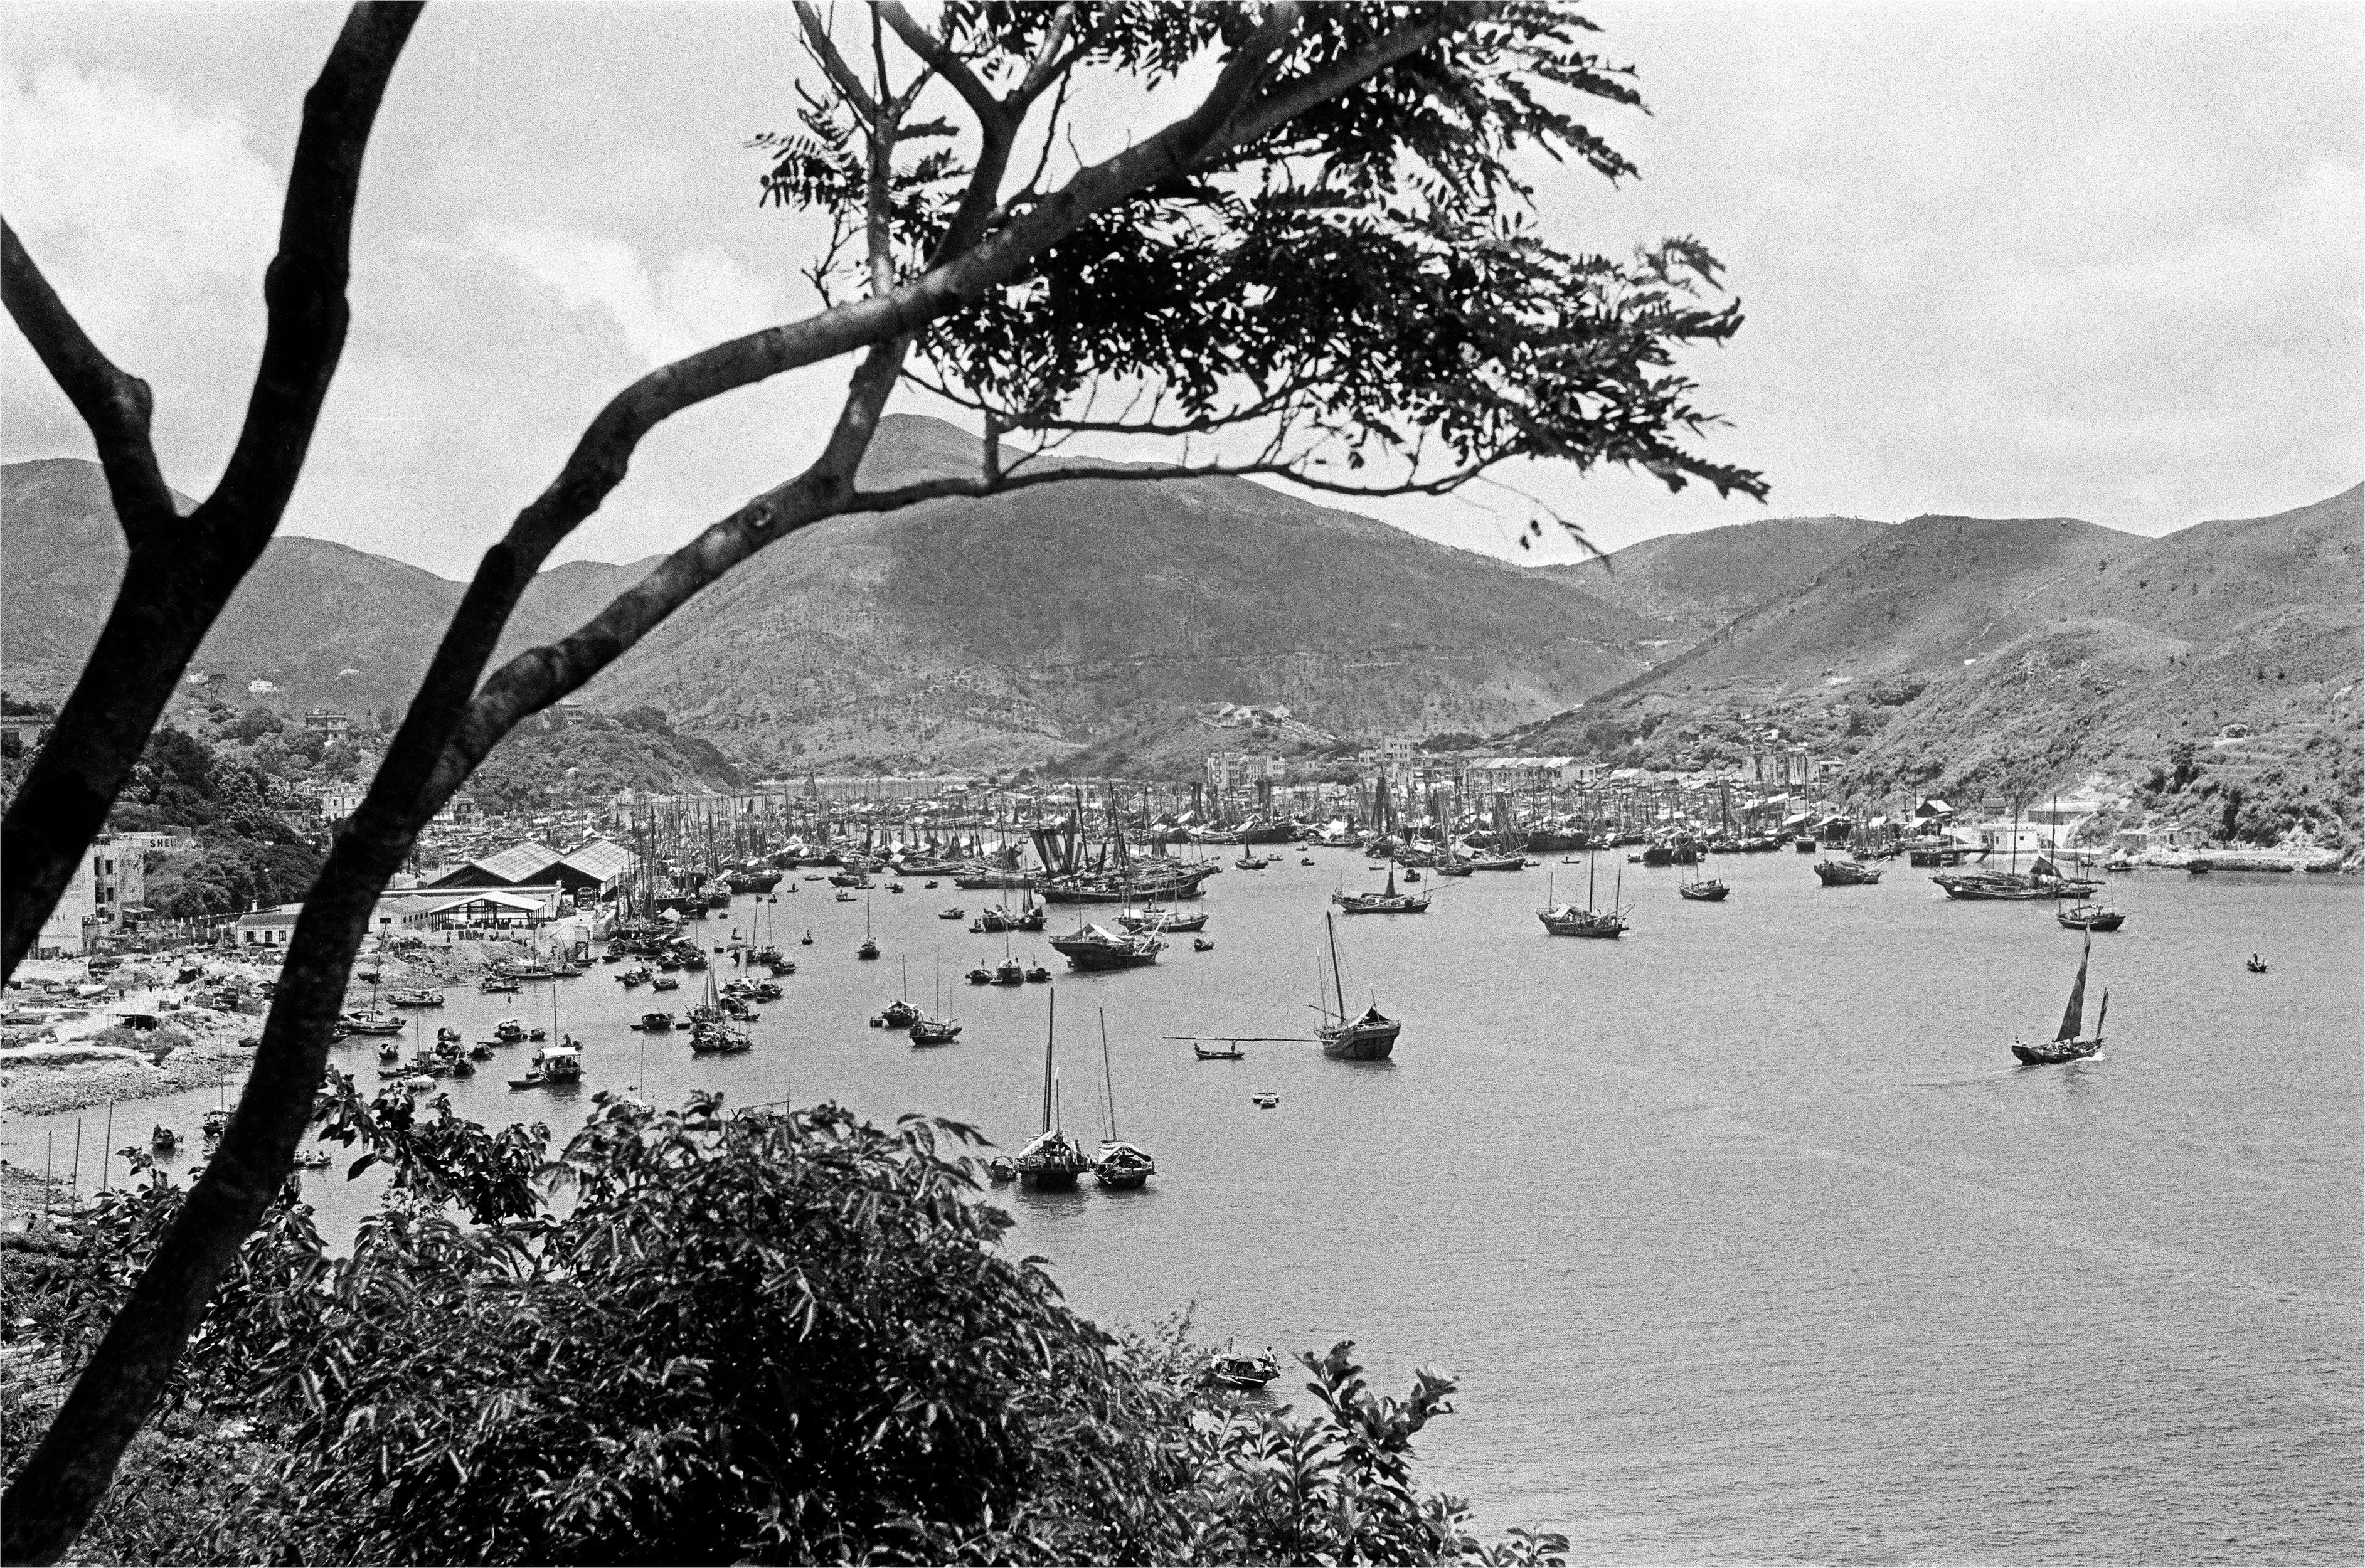 100th Anniversary Celebration Coffret # 11 - Hong Kong - Vintage Photography - Gray Black and White Photograph by Fabrizio La Torre